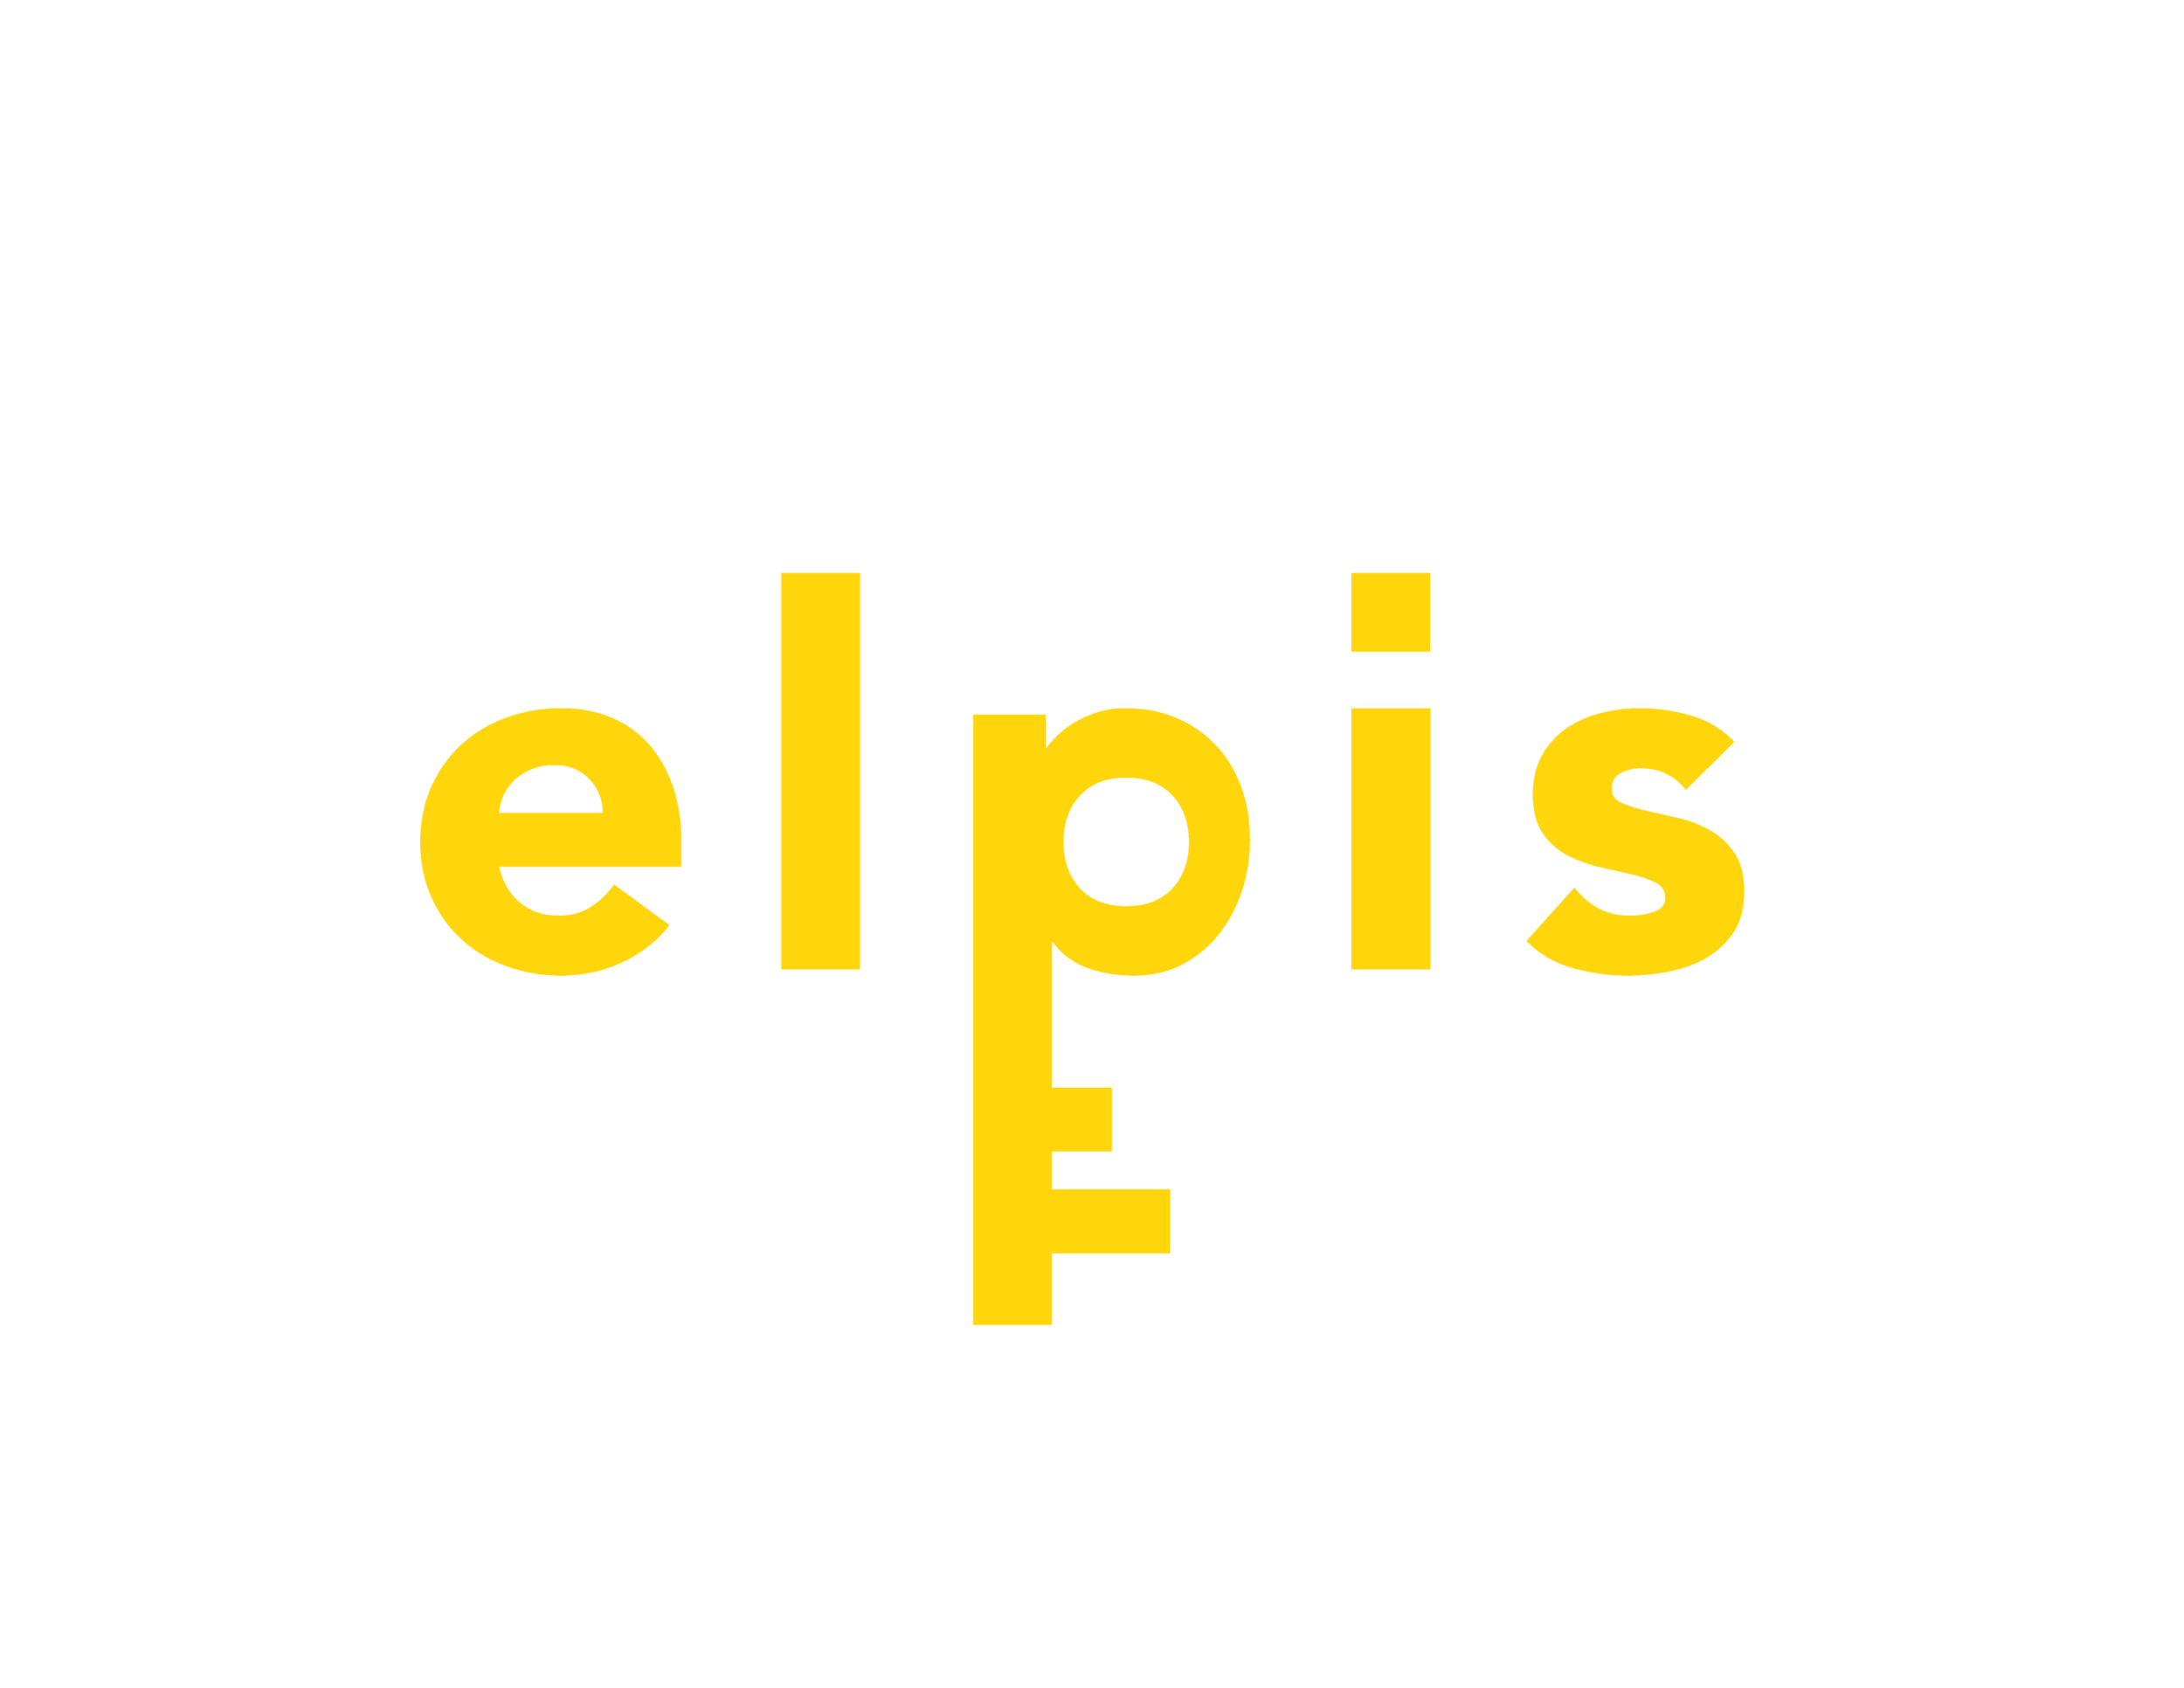 Elpis Foundation